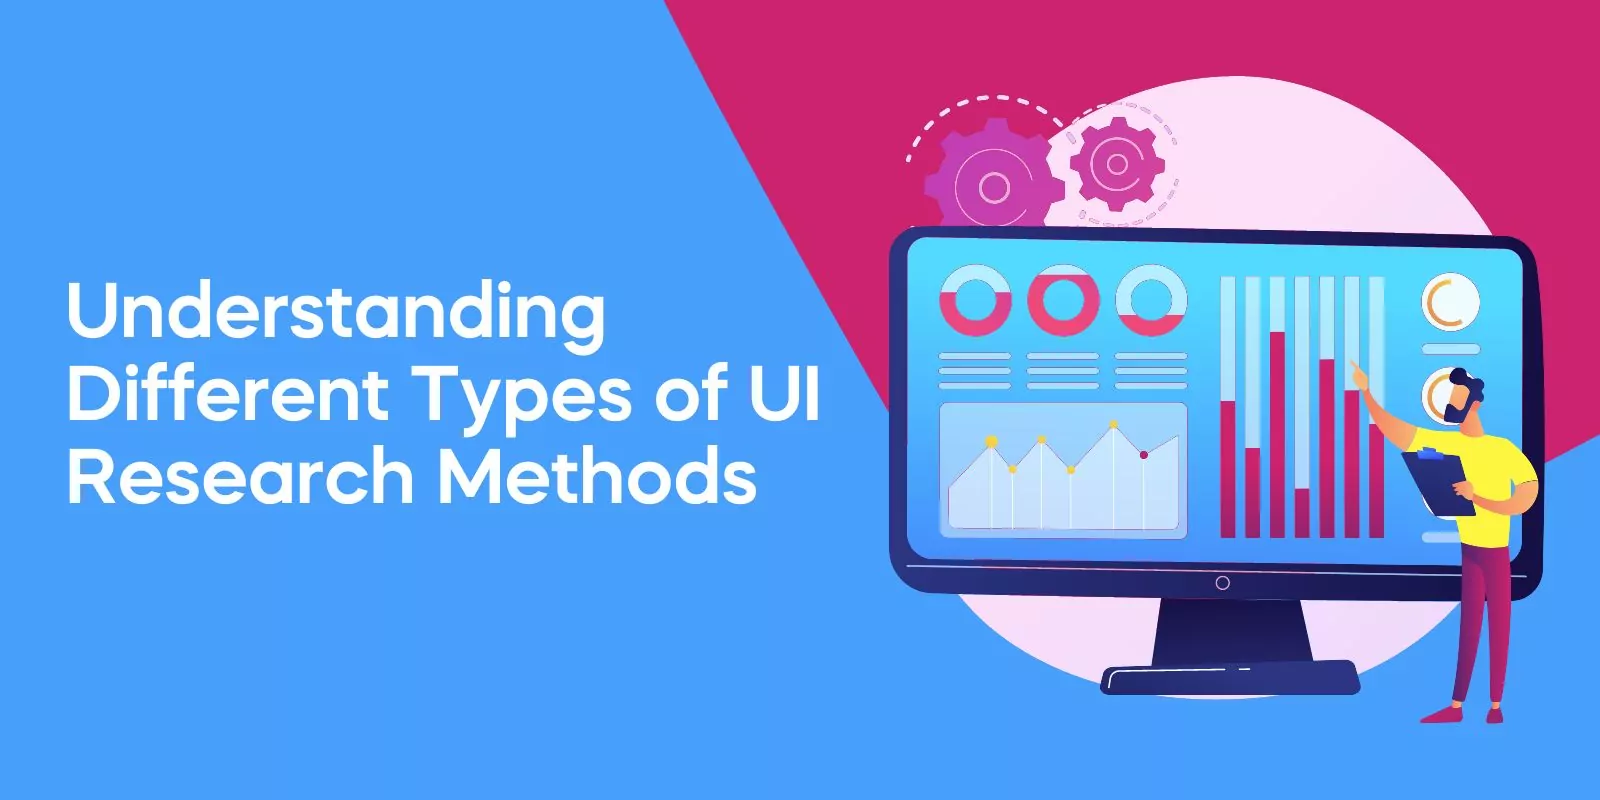 Understanding Different Types of UI Research Methods